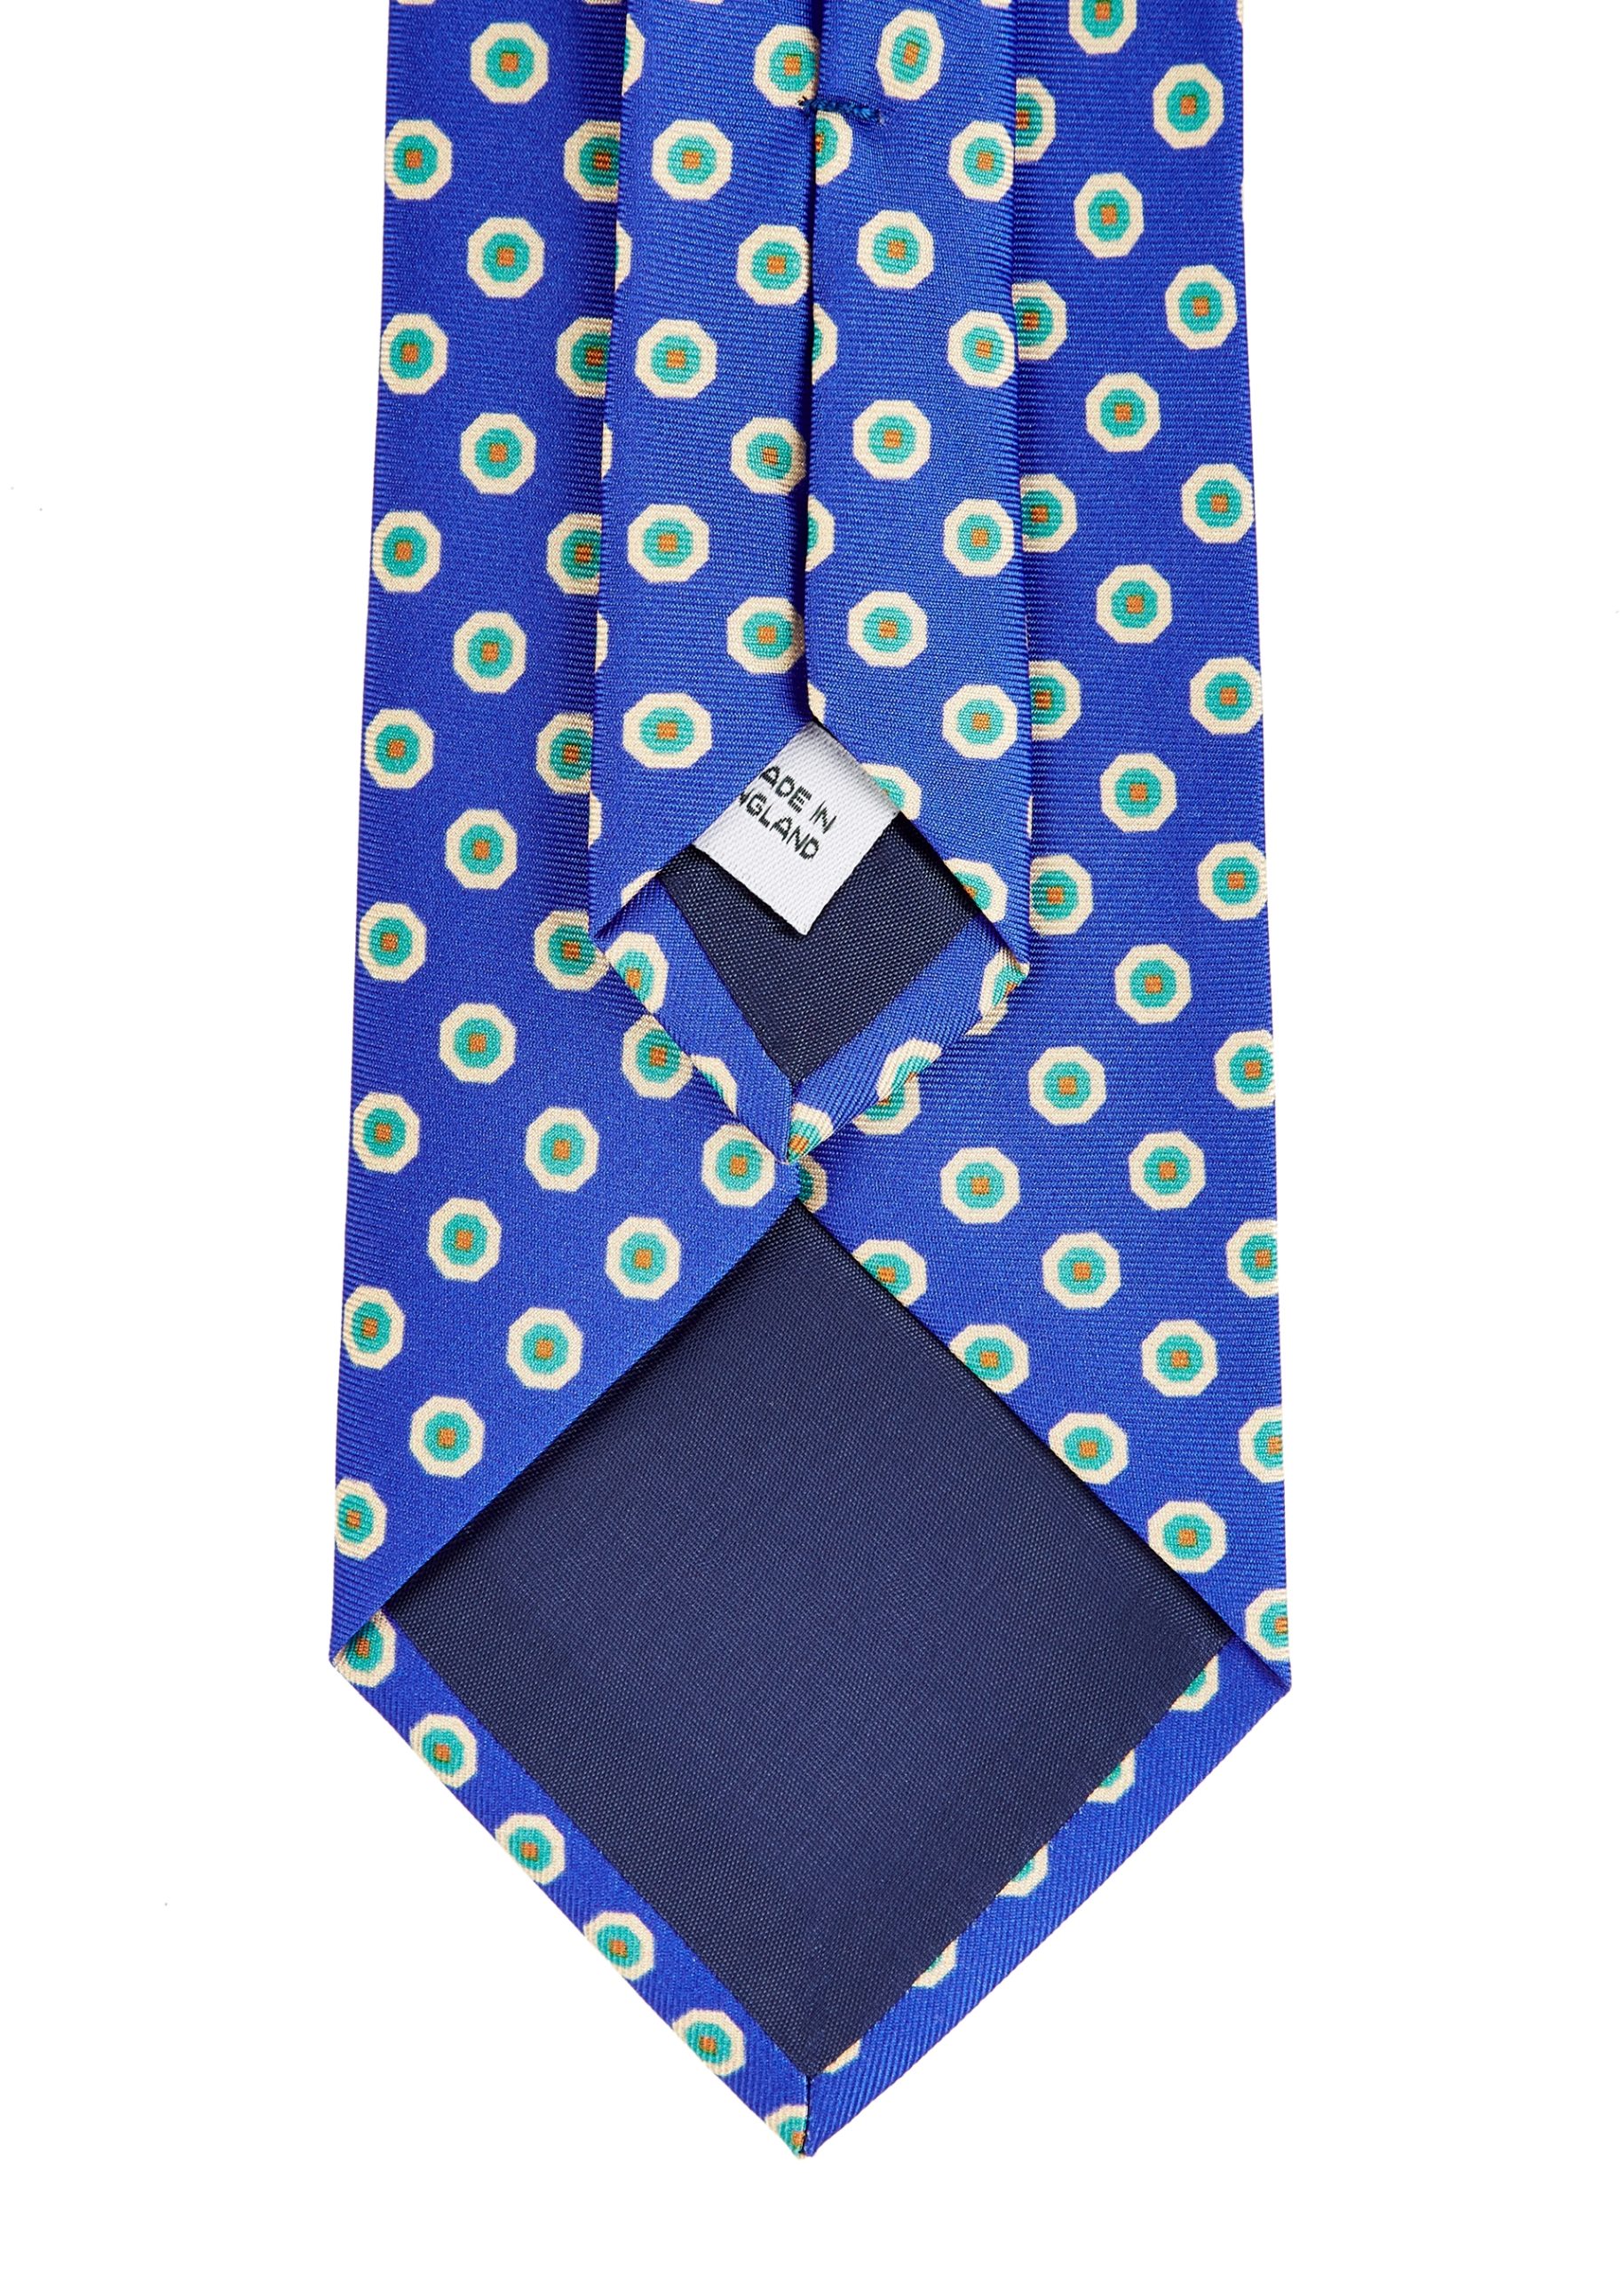 Roderick Charles hexagonal royal blue silk tie.